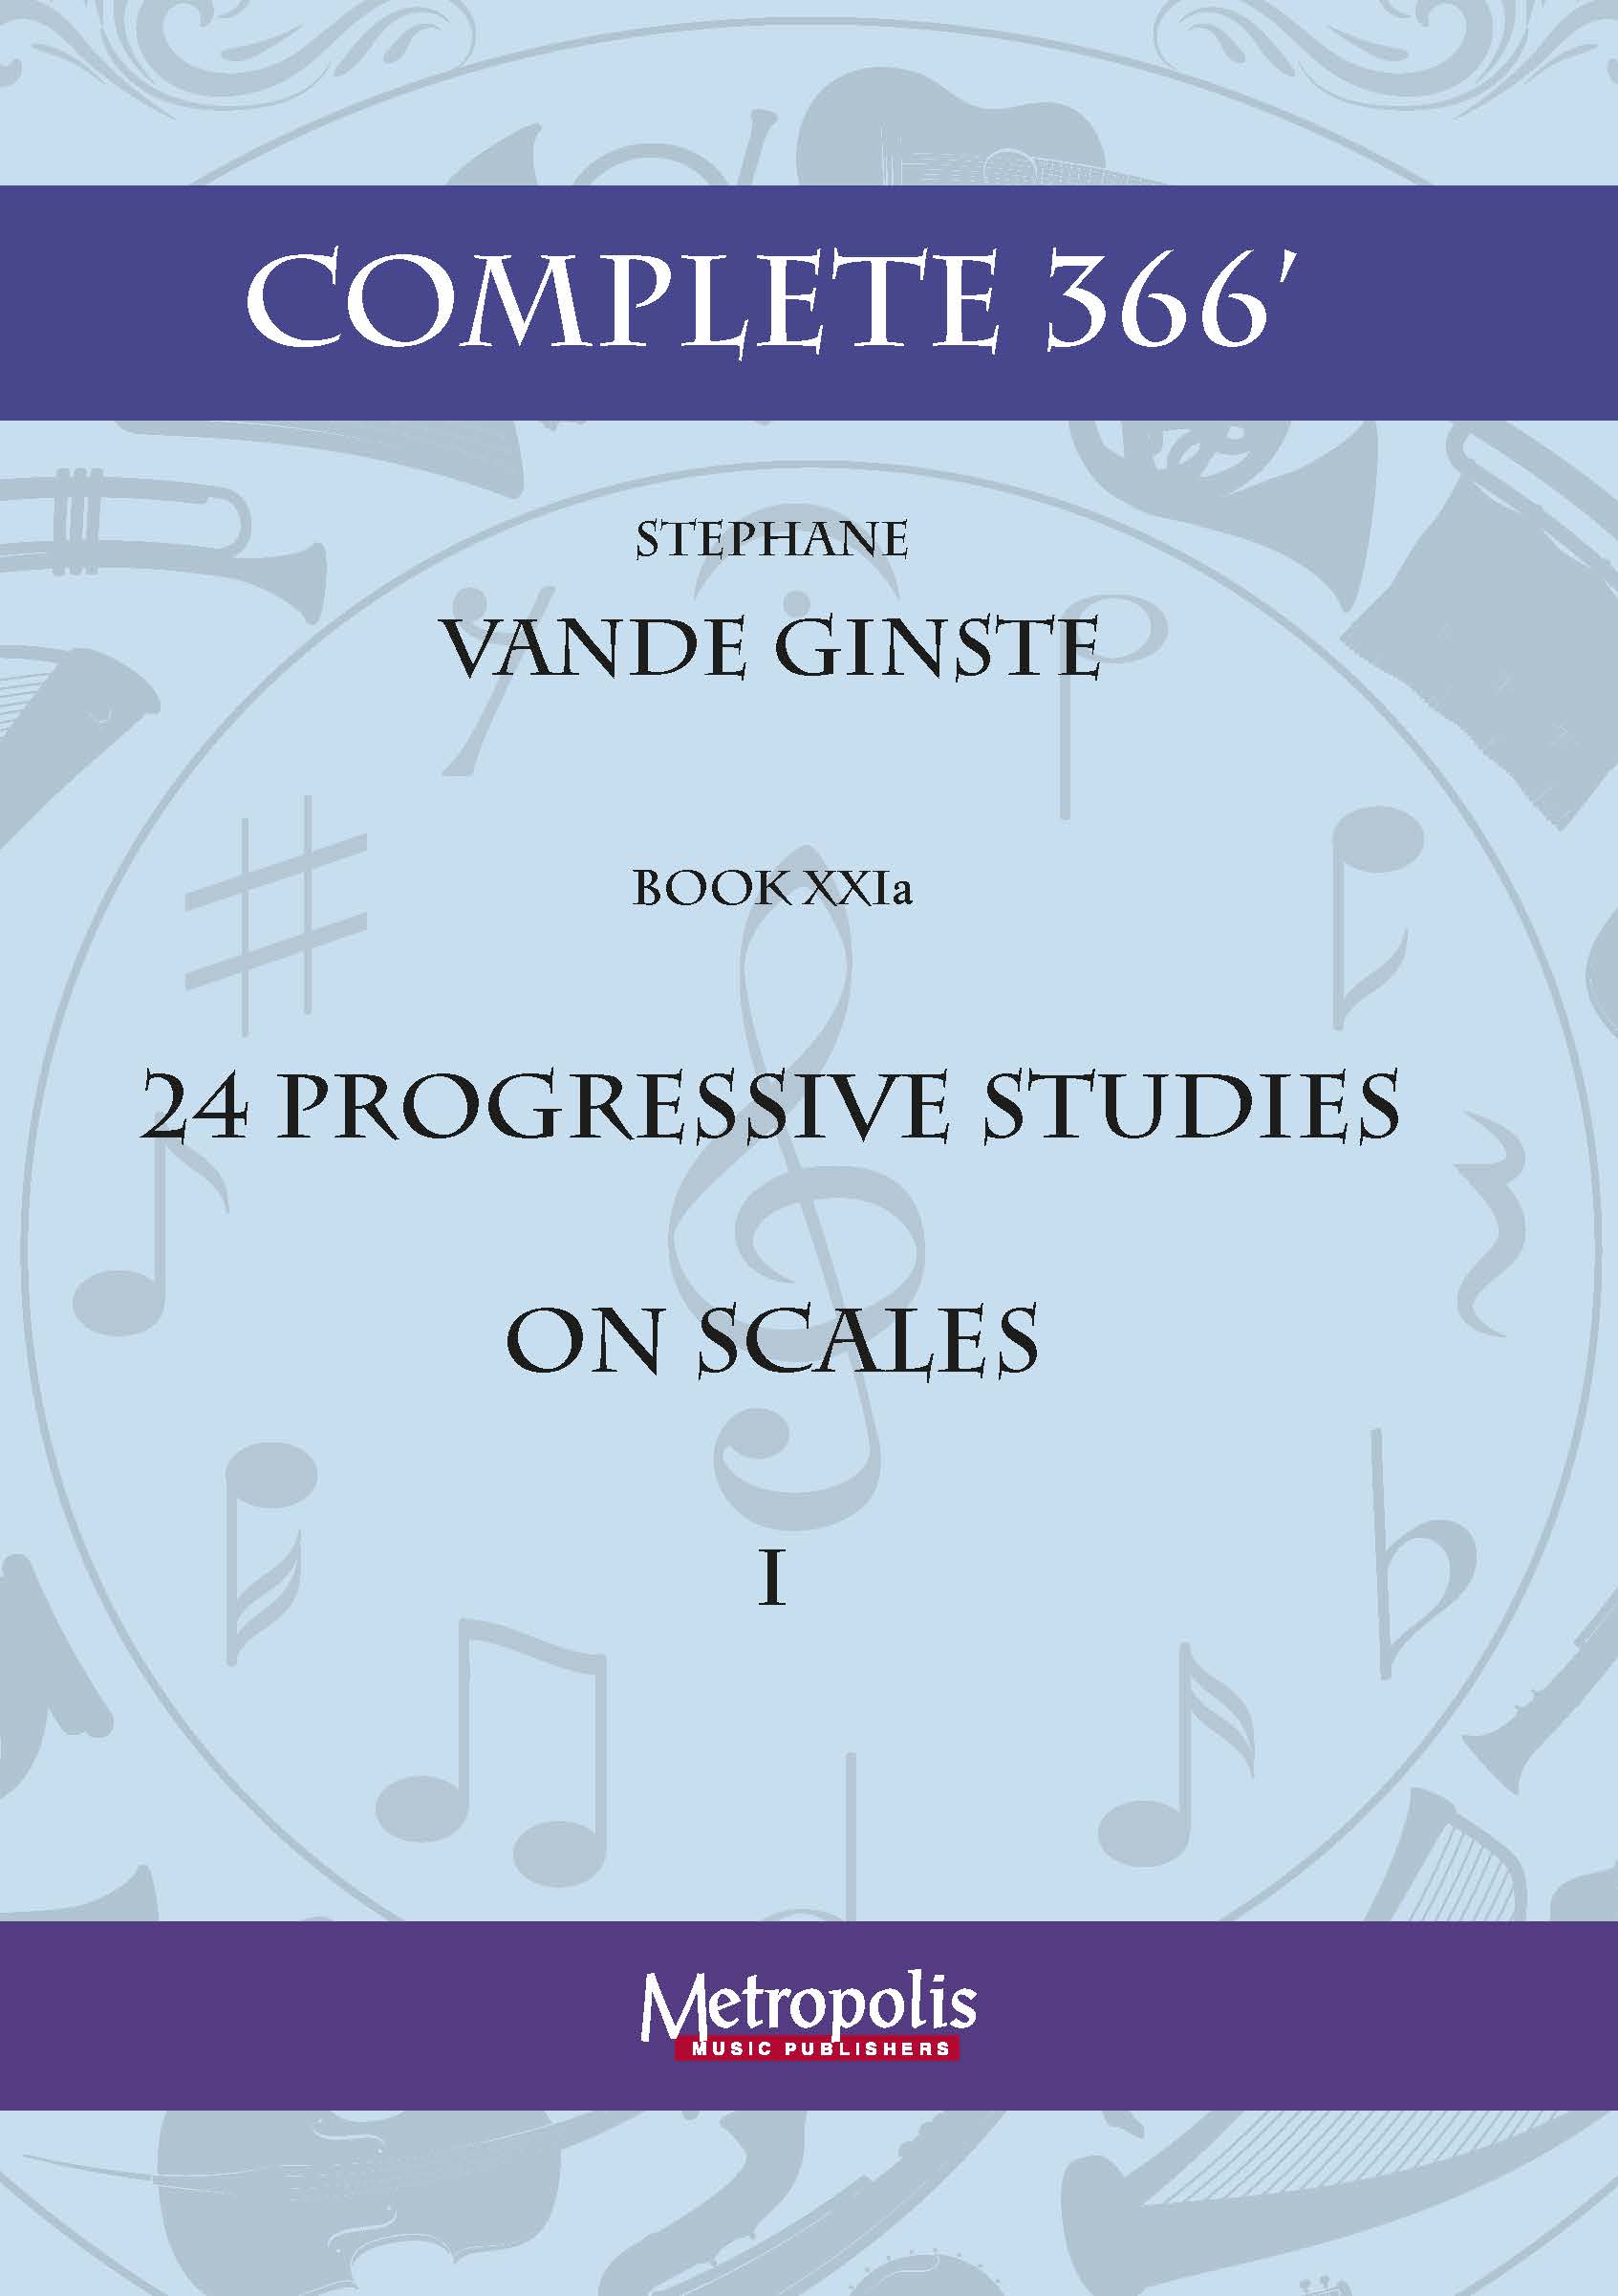 Complete 366' Book Xxia: Studies On Scales (VANDE GINSTE STEPHANE)